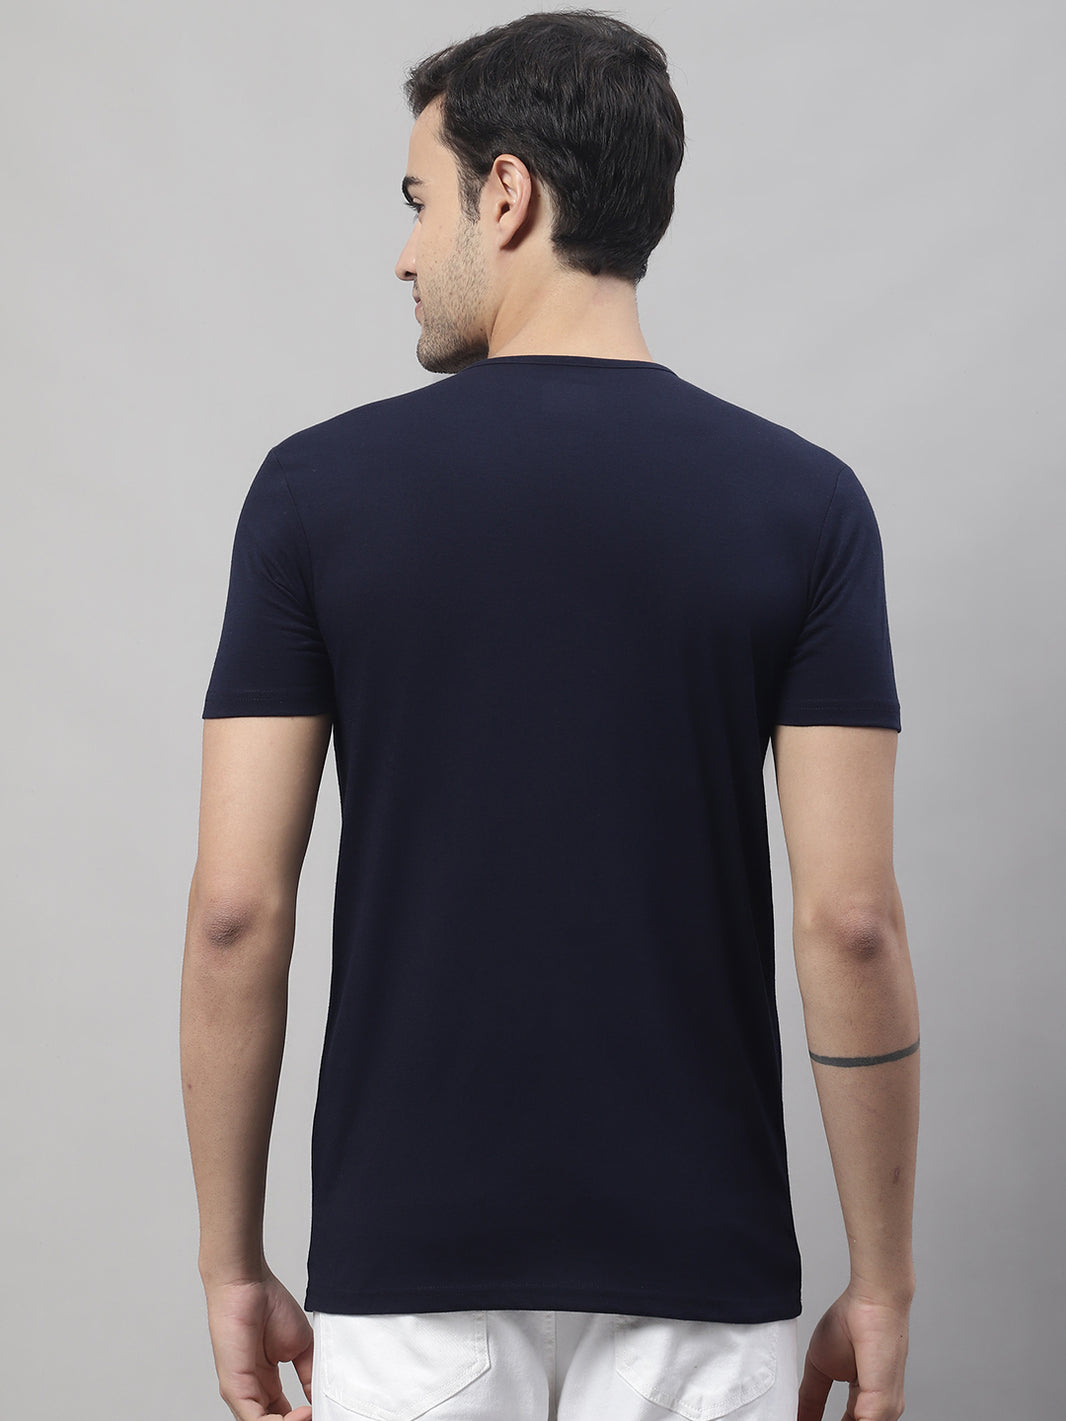 Vimal Jonney Round Neck Cotton Printed Navy Blue T-Shirt for Men